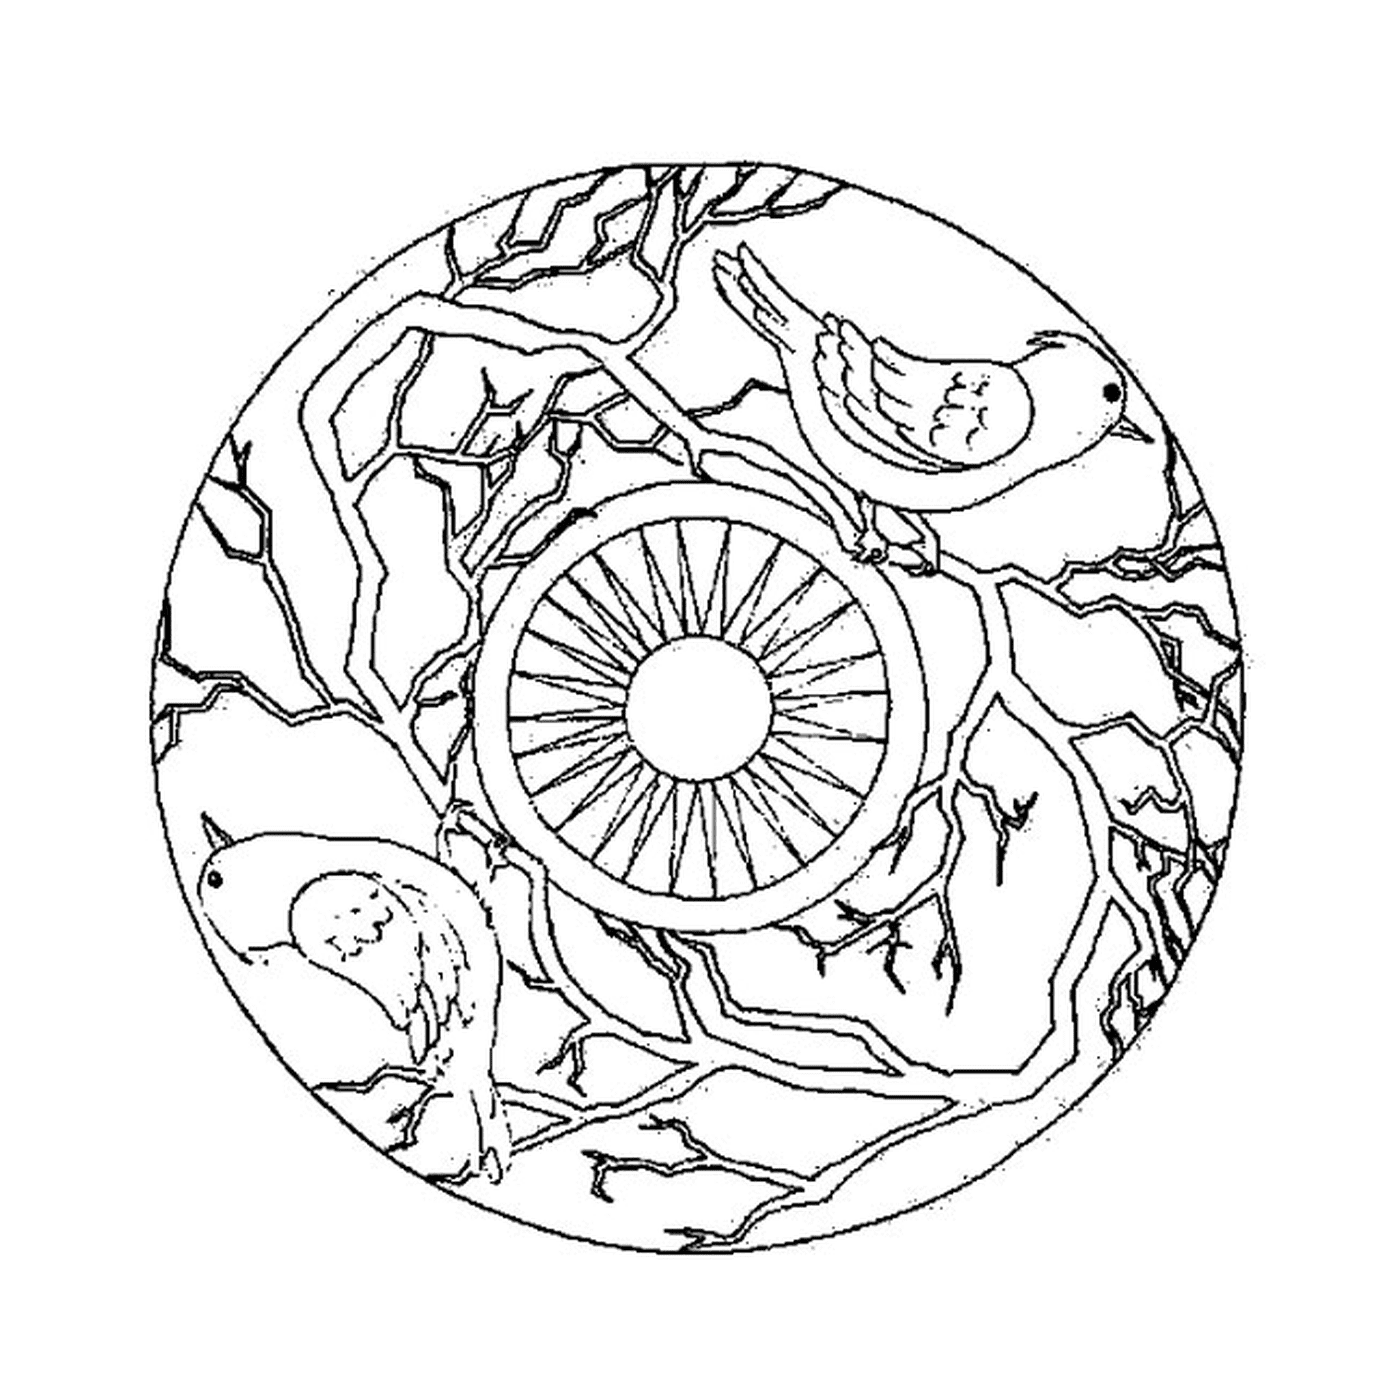  Circular Mandala with birds on branches 